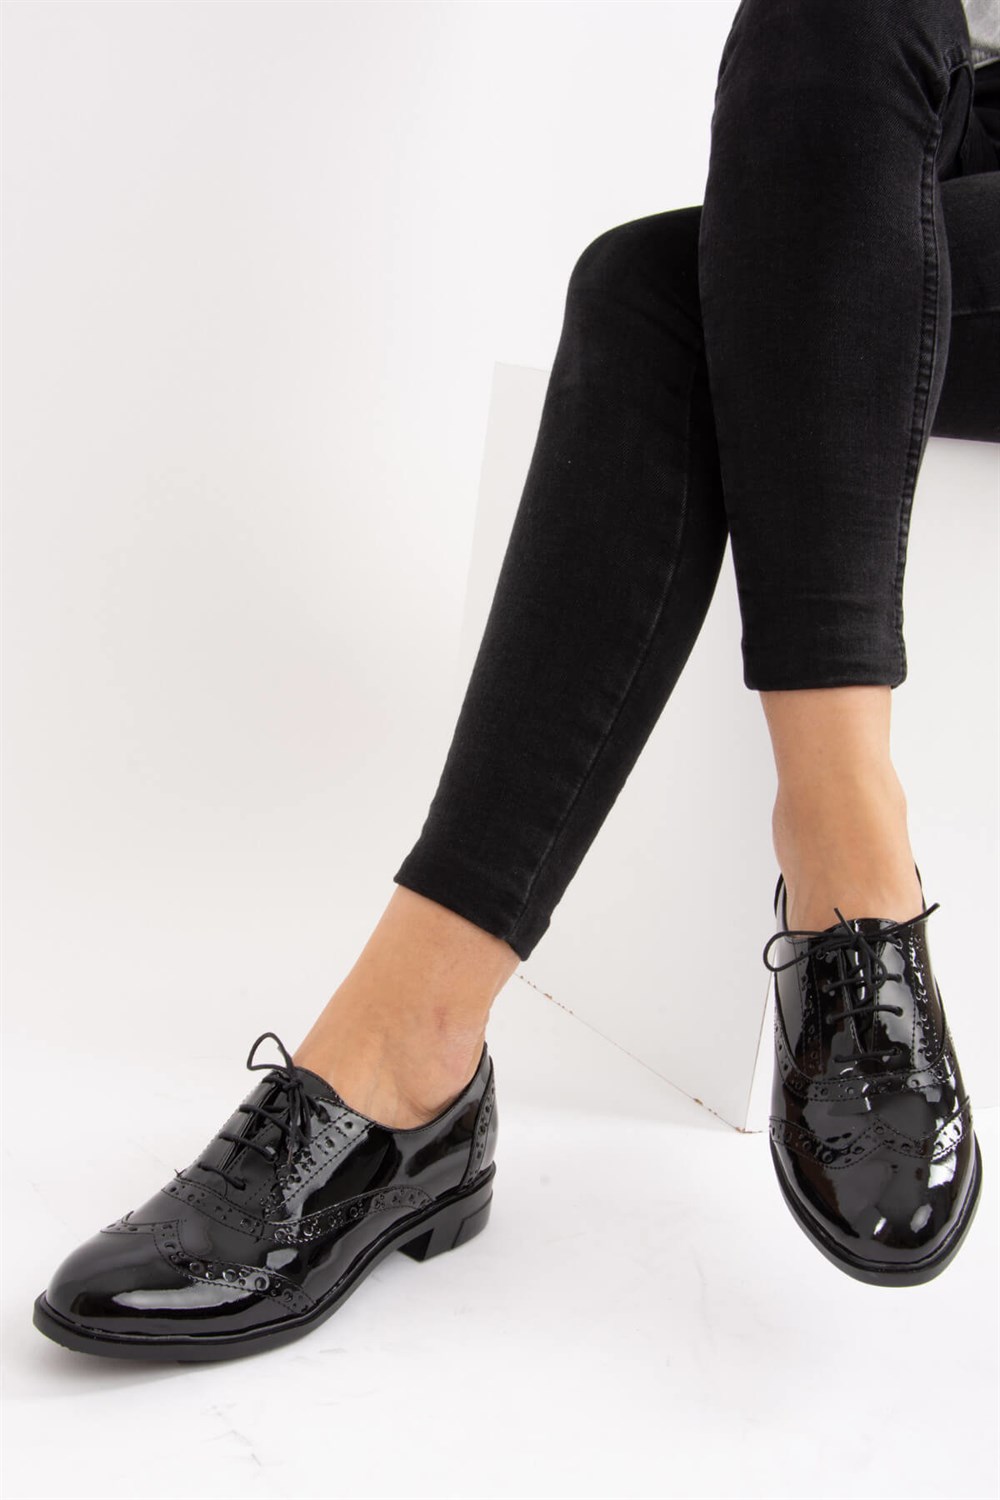 Fox Shoes Siyah Rugan Kadın Ayakkabı E288030008